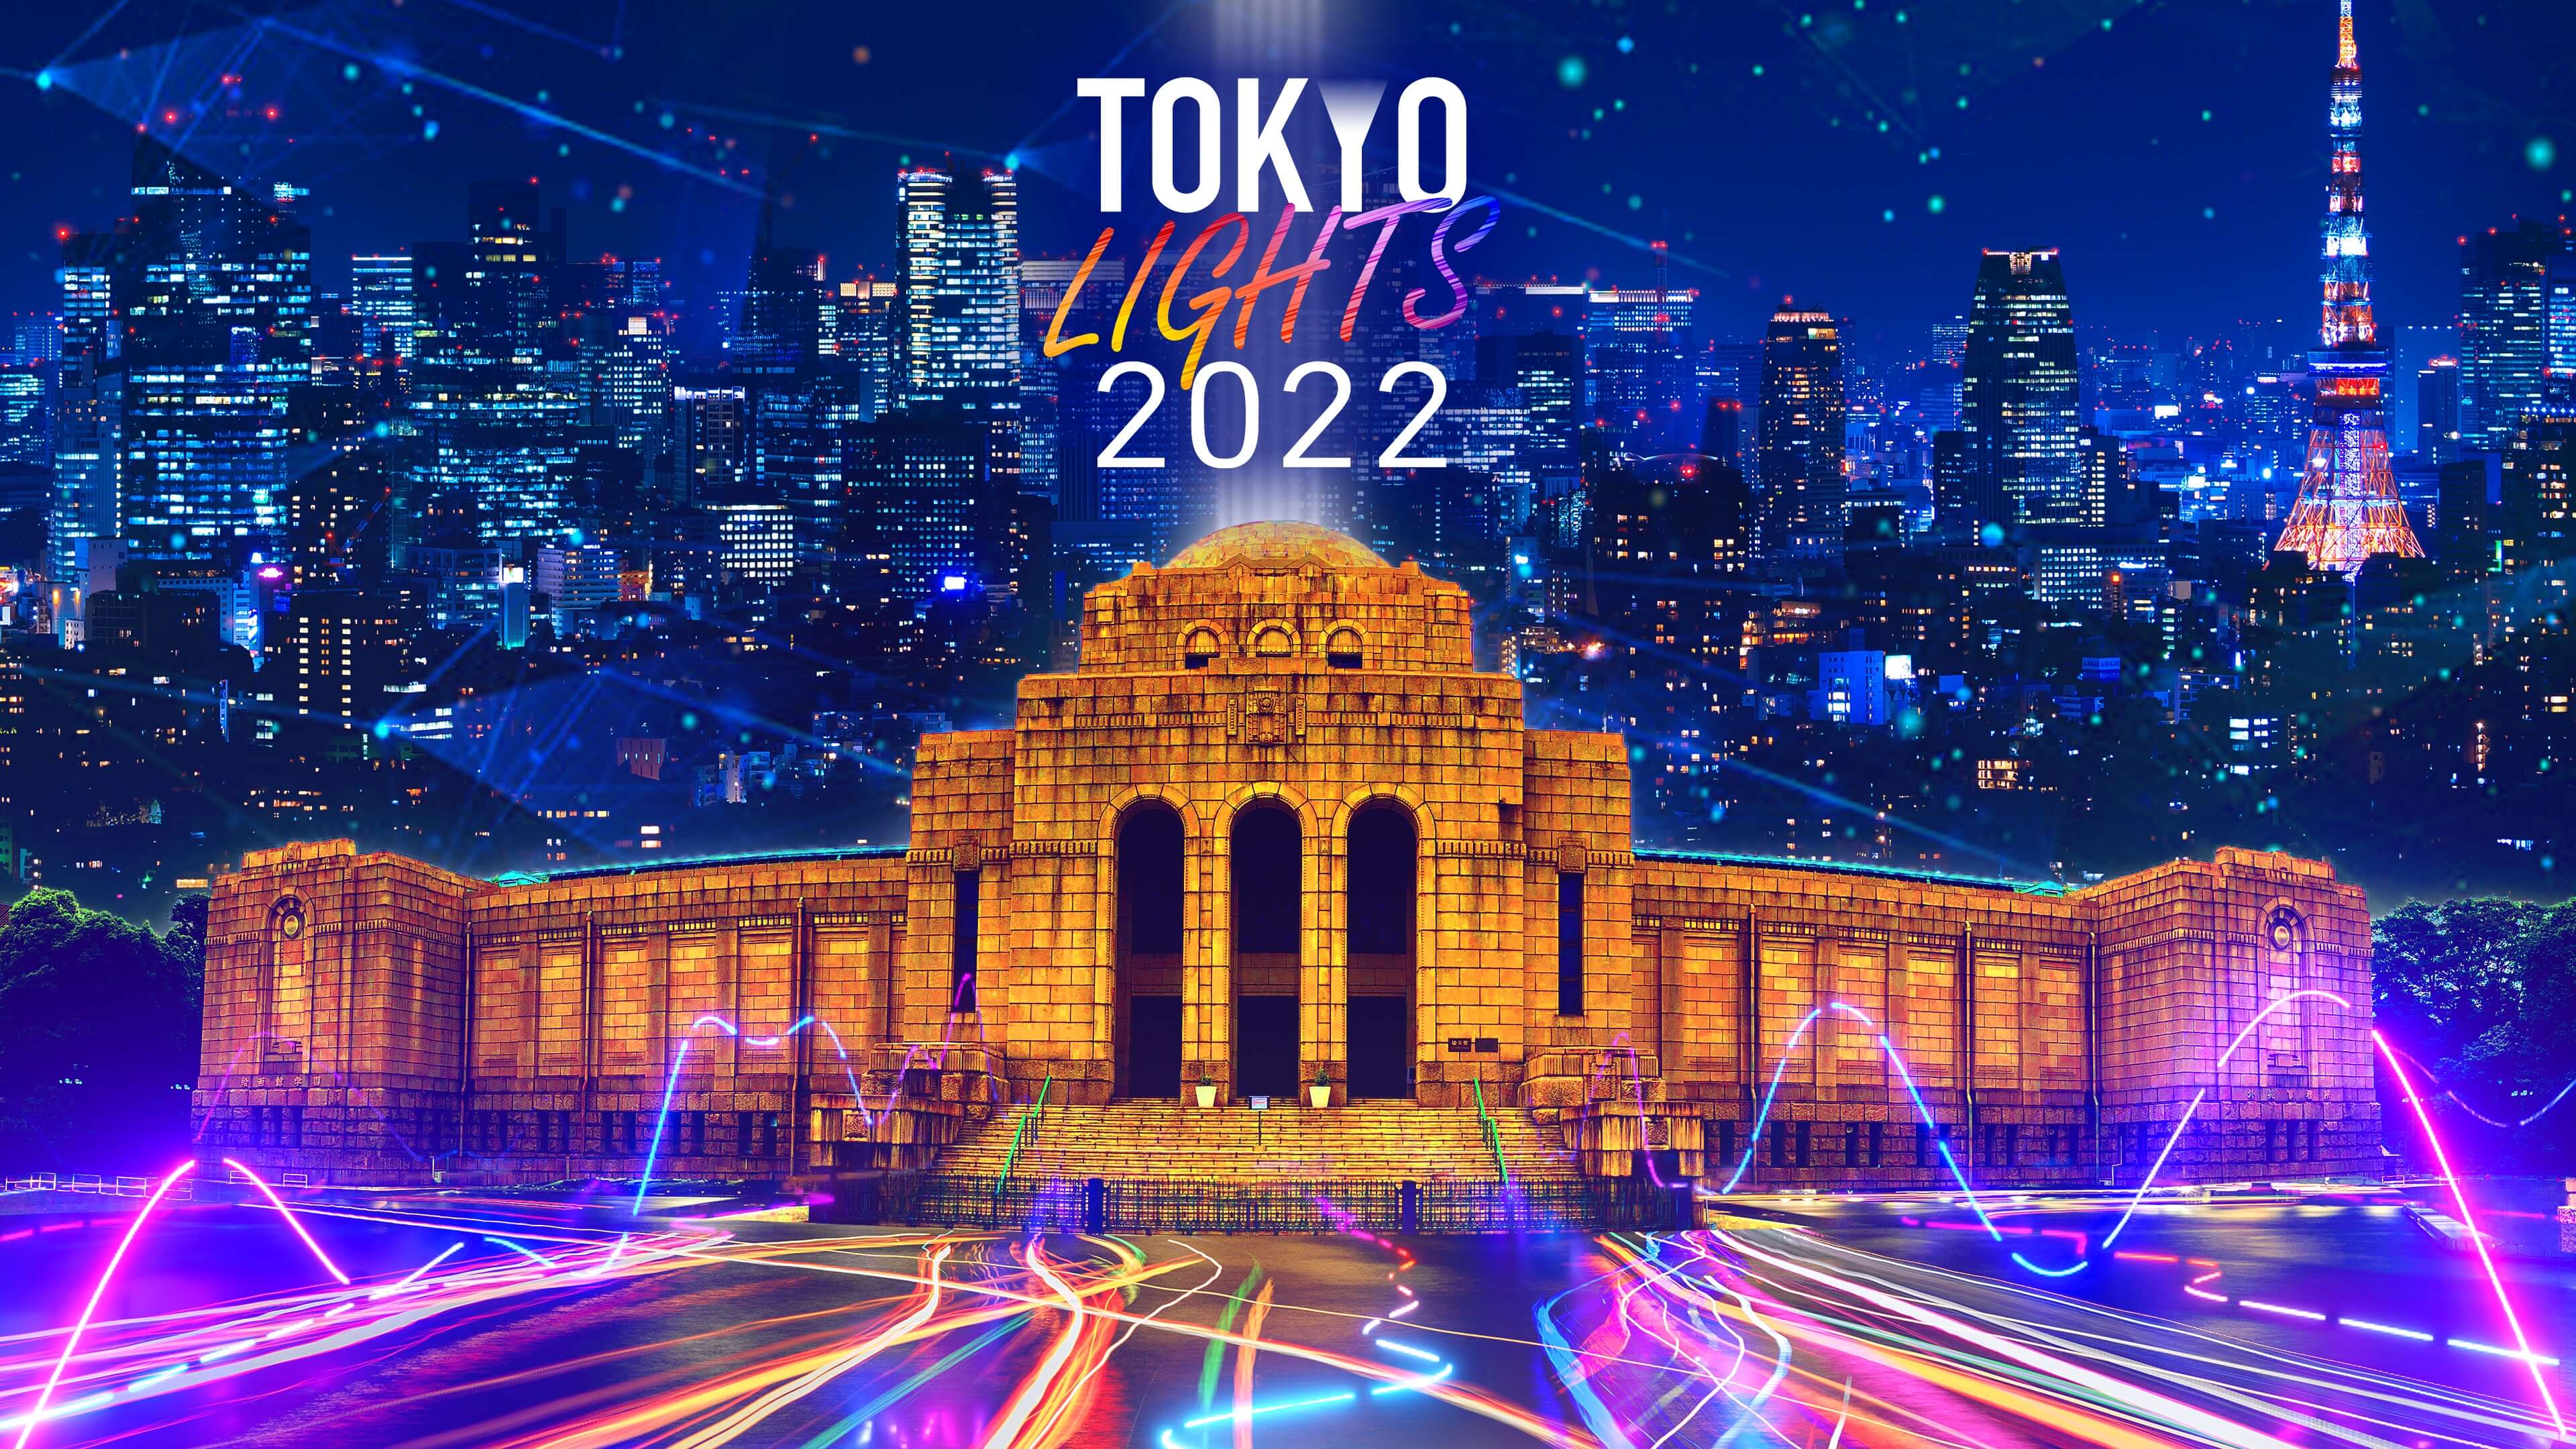 「TOKYO LIGHTS 2022-プロジェクションマッピング国際大会-」1